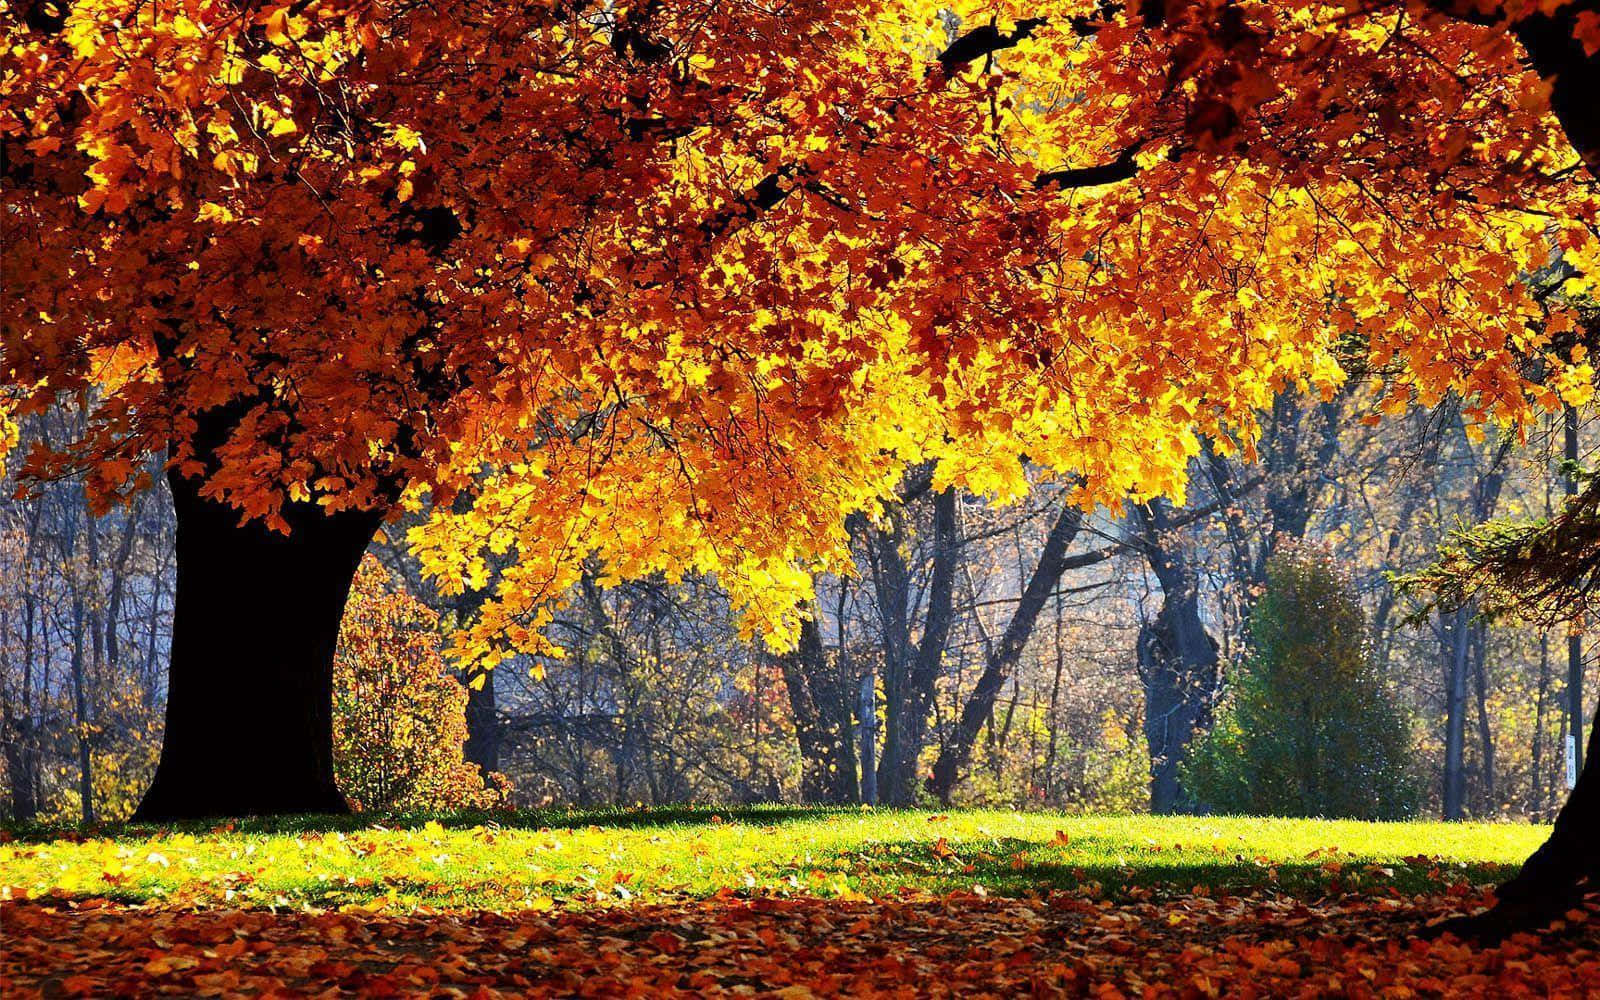 "A Relaxing Nature Fall Scene" Wallpaper